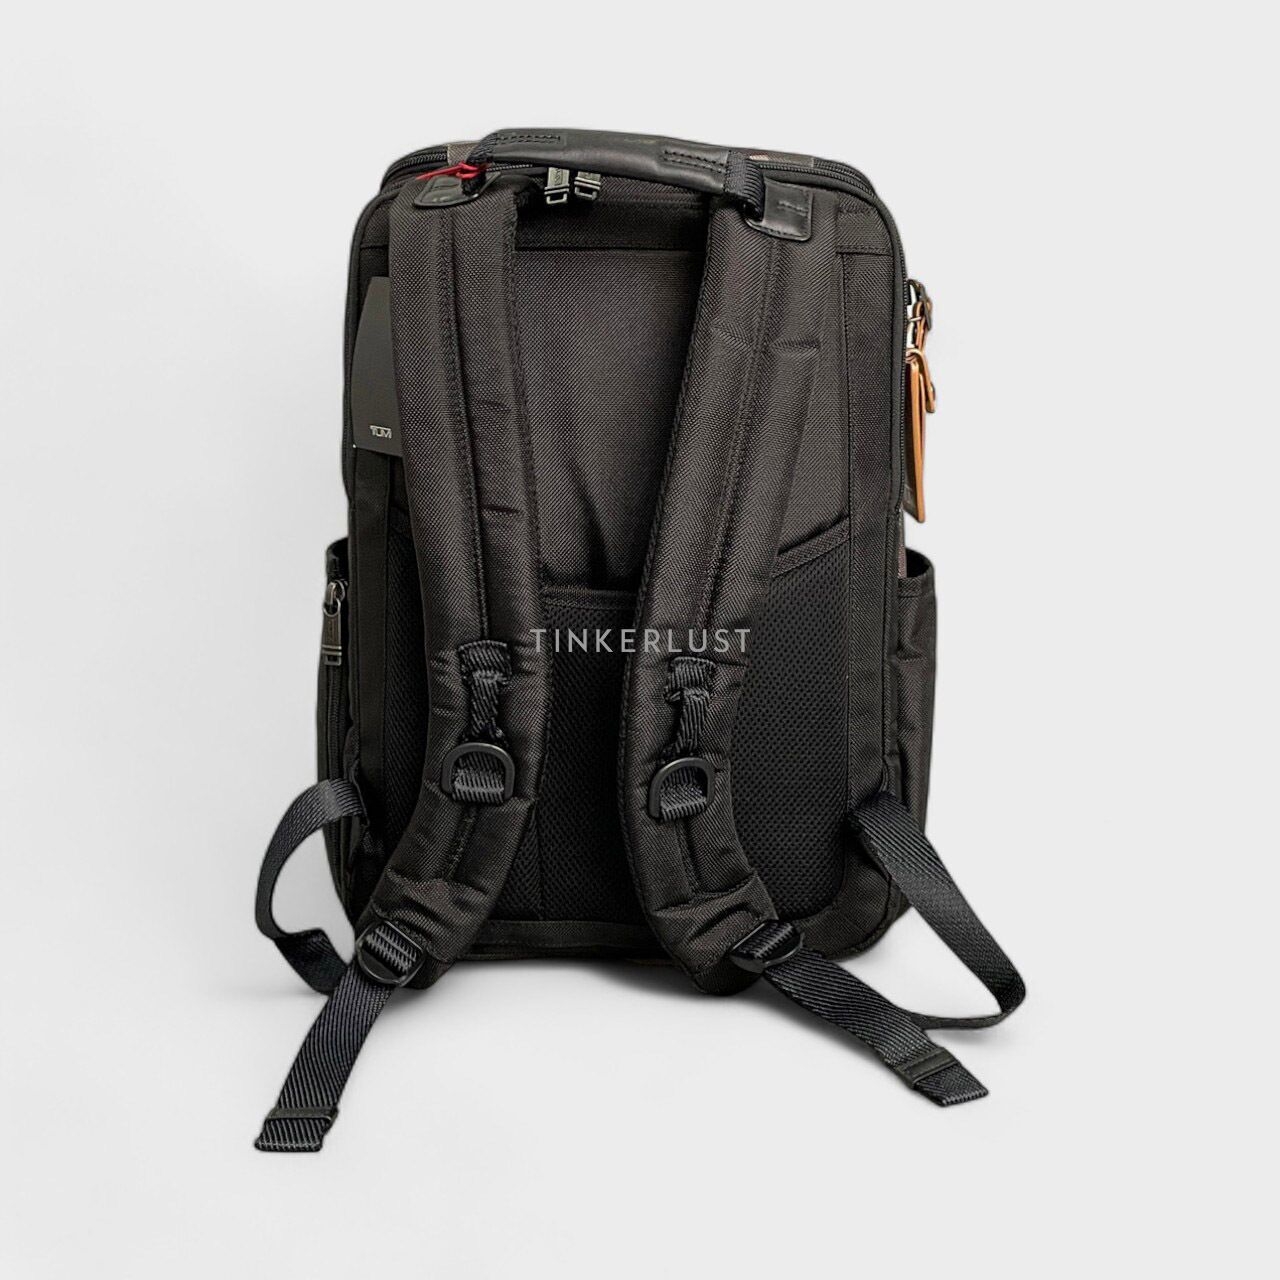 Tumi Thornhill Black Camo Backpack